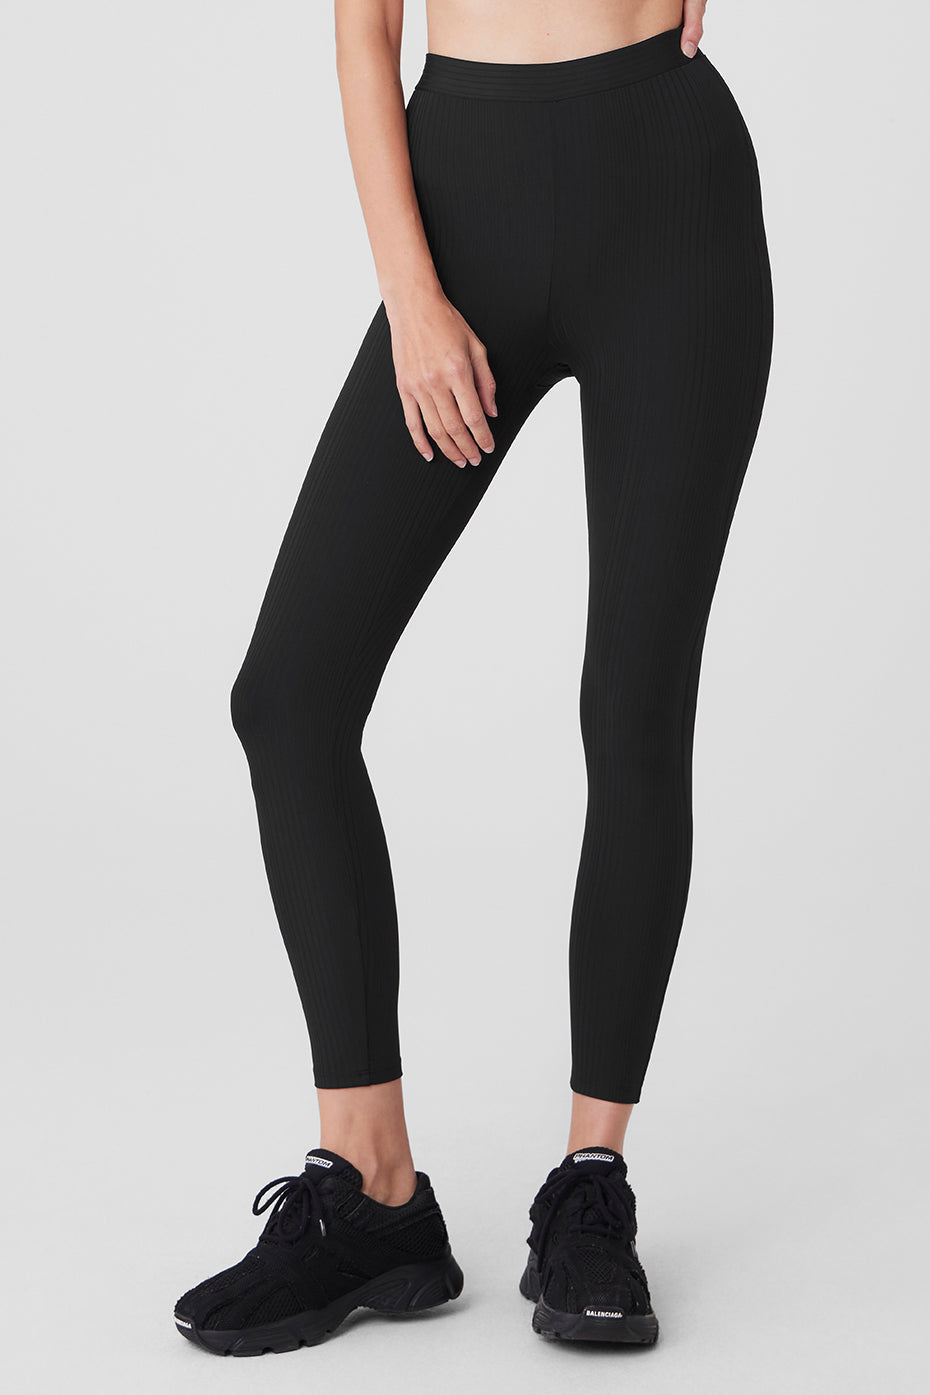 ALO Yoga, Pants & Jumpsuits, Alo Yoga Highwaist Cinched Legging Limited  Edition Chestnut Shine S